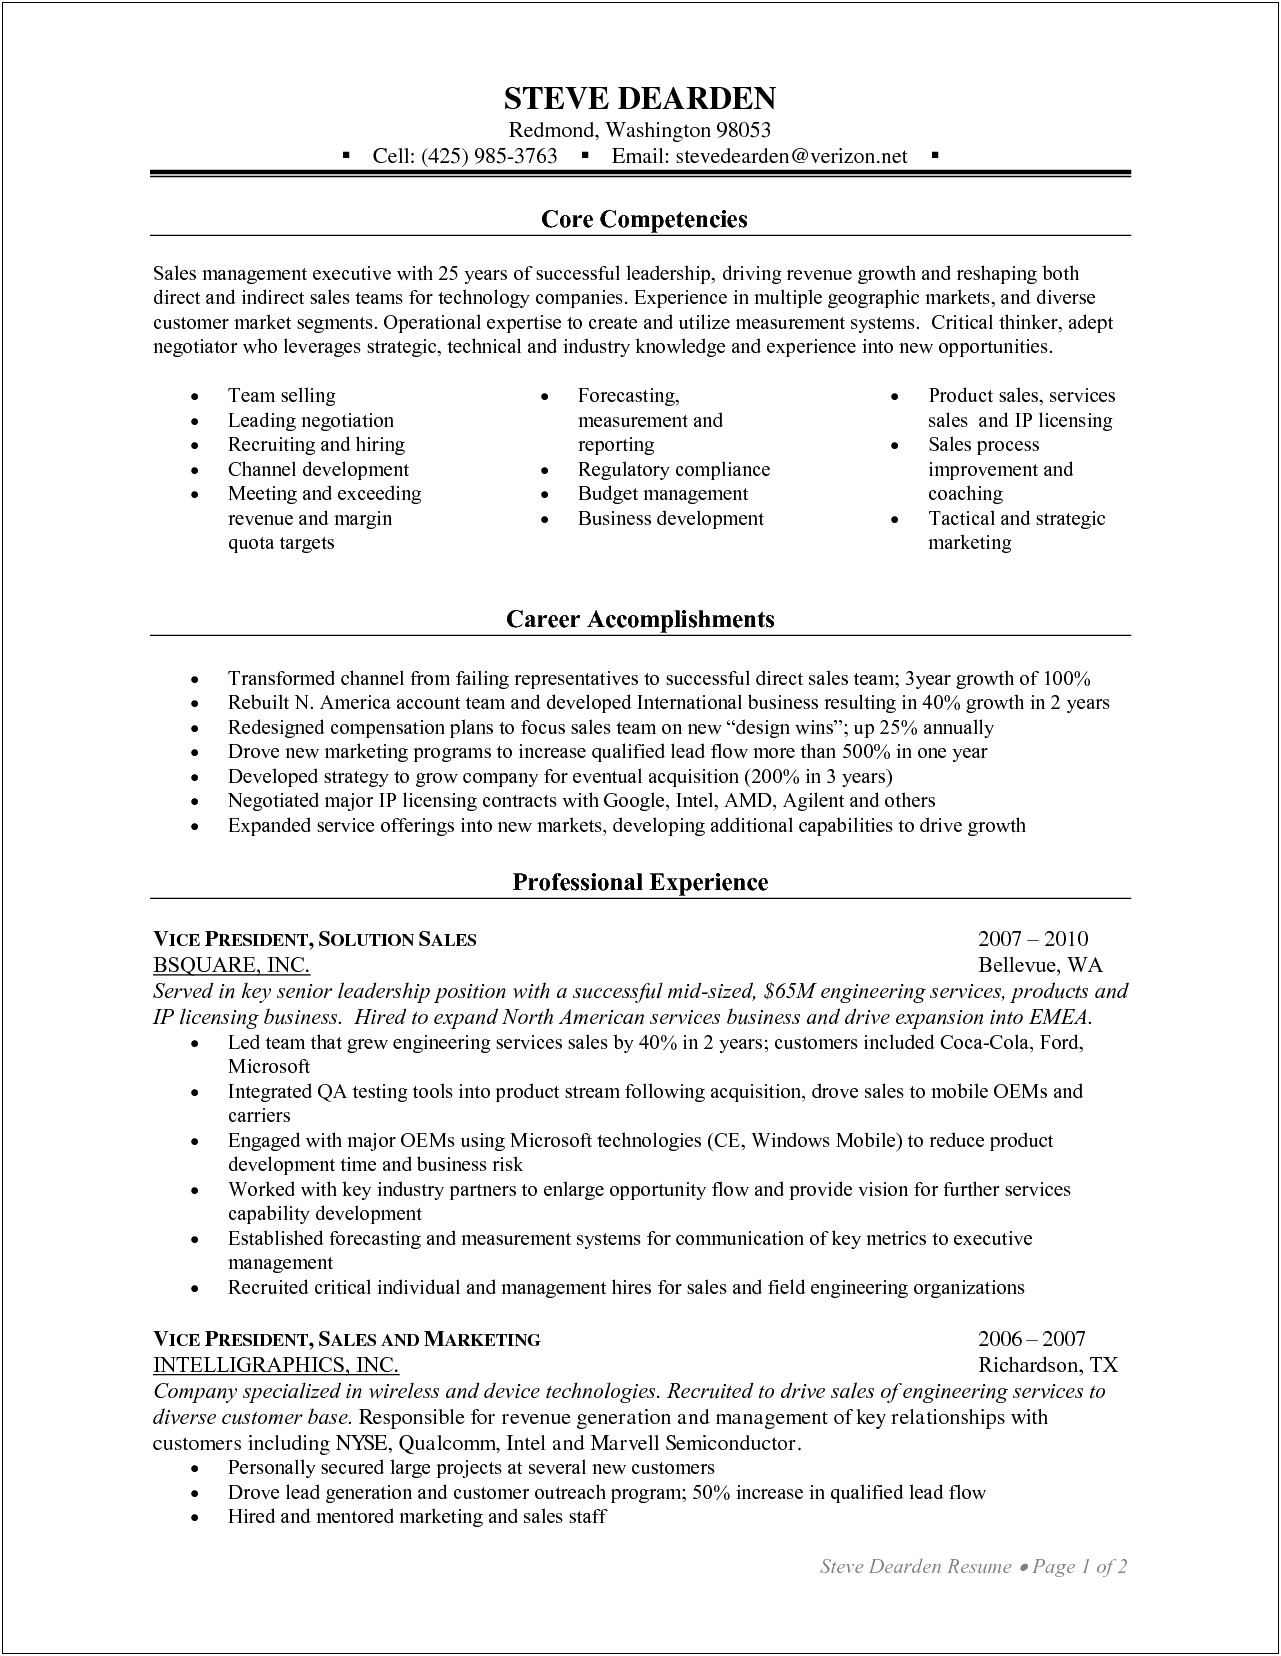 Job Skills And Competencies Resume